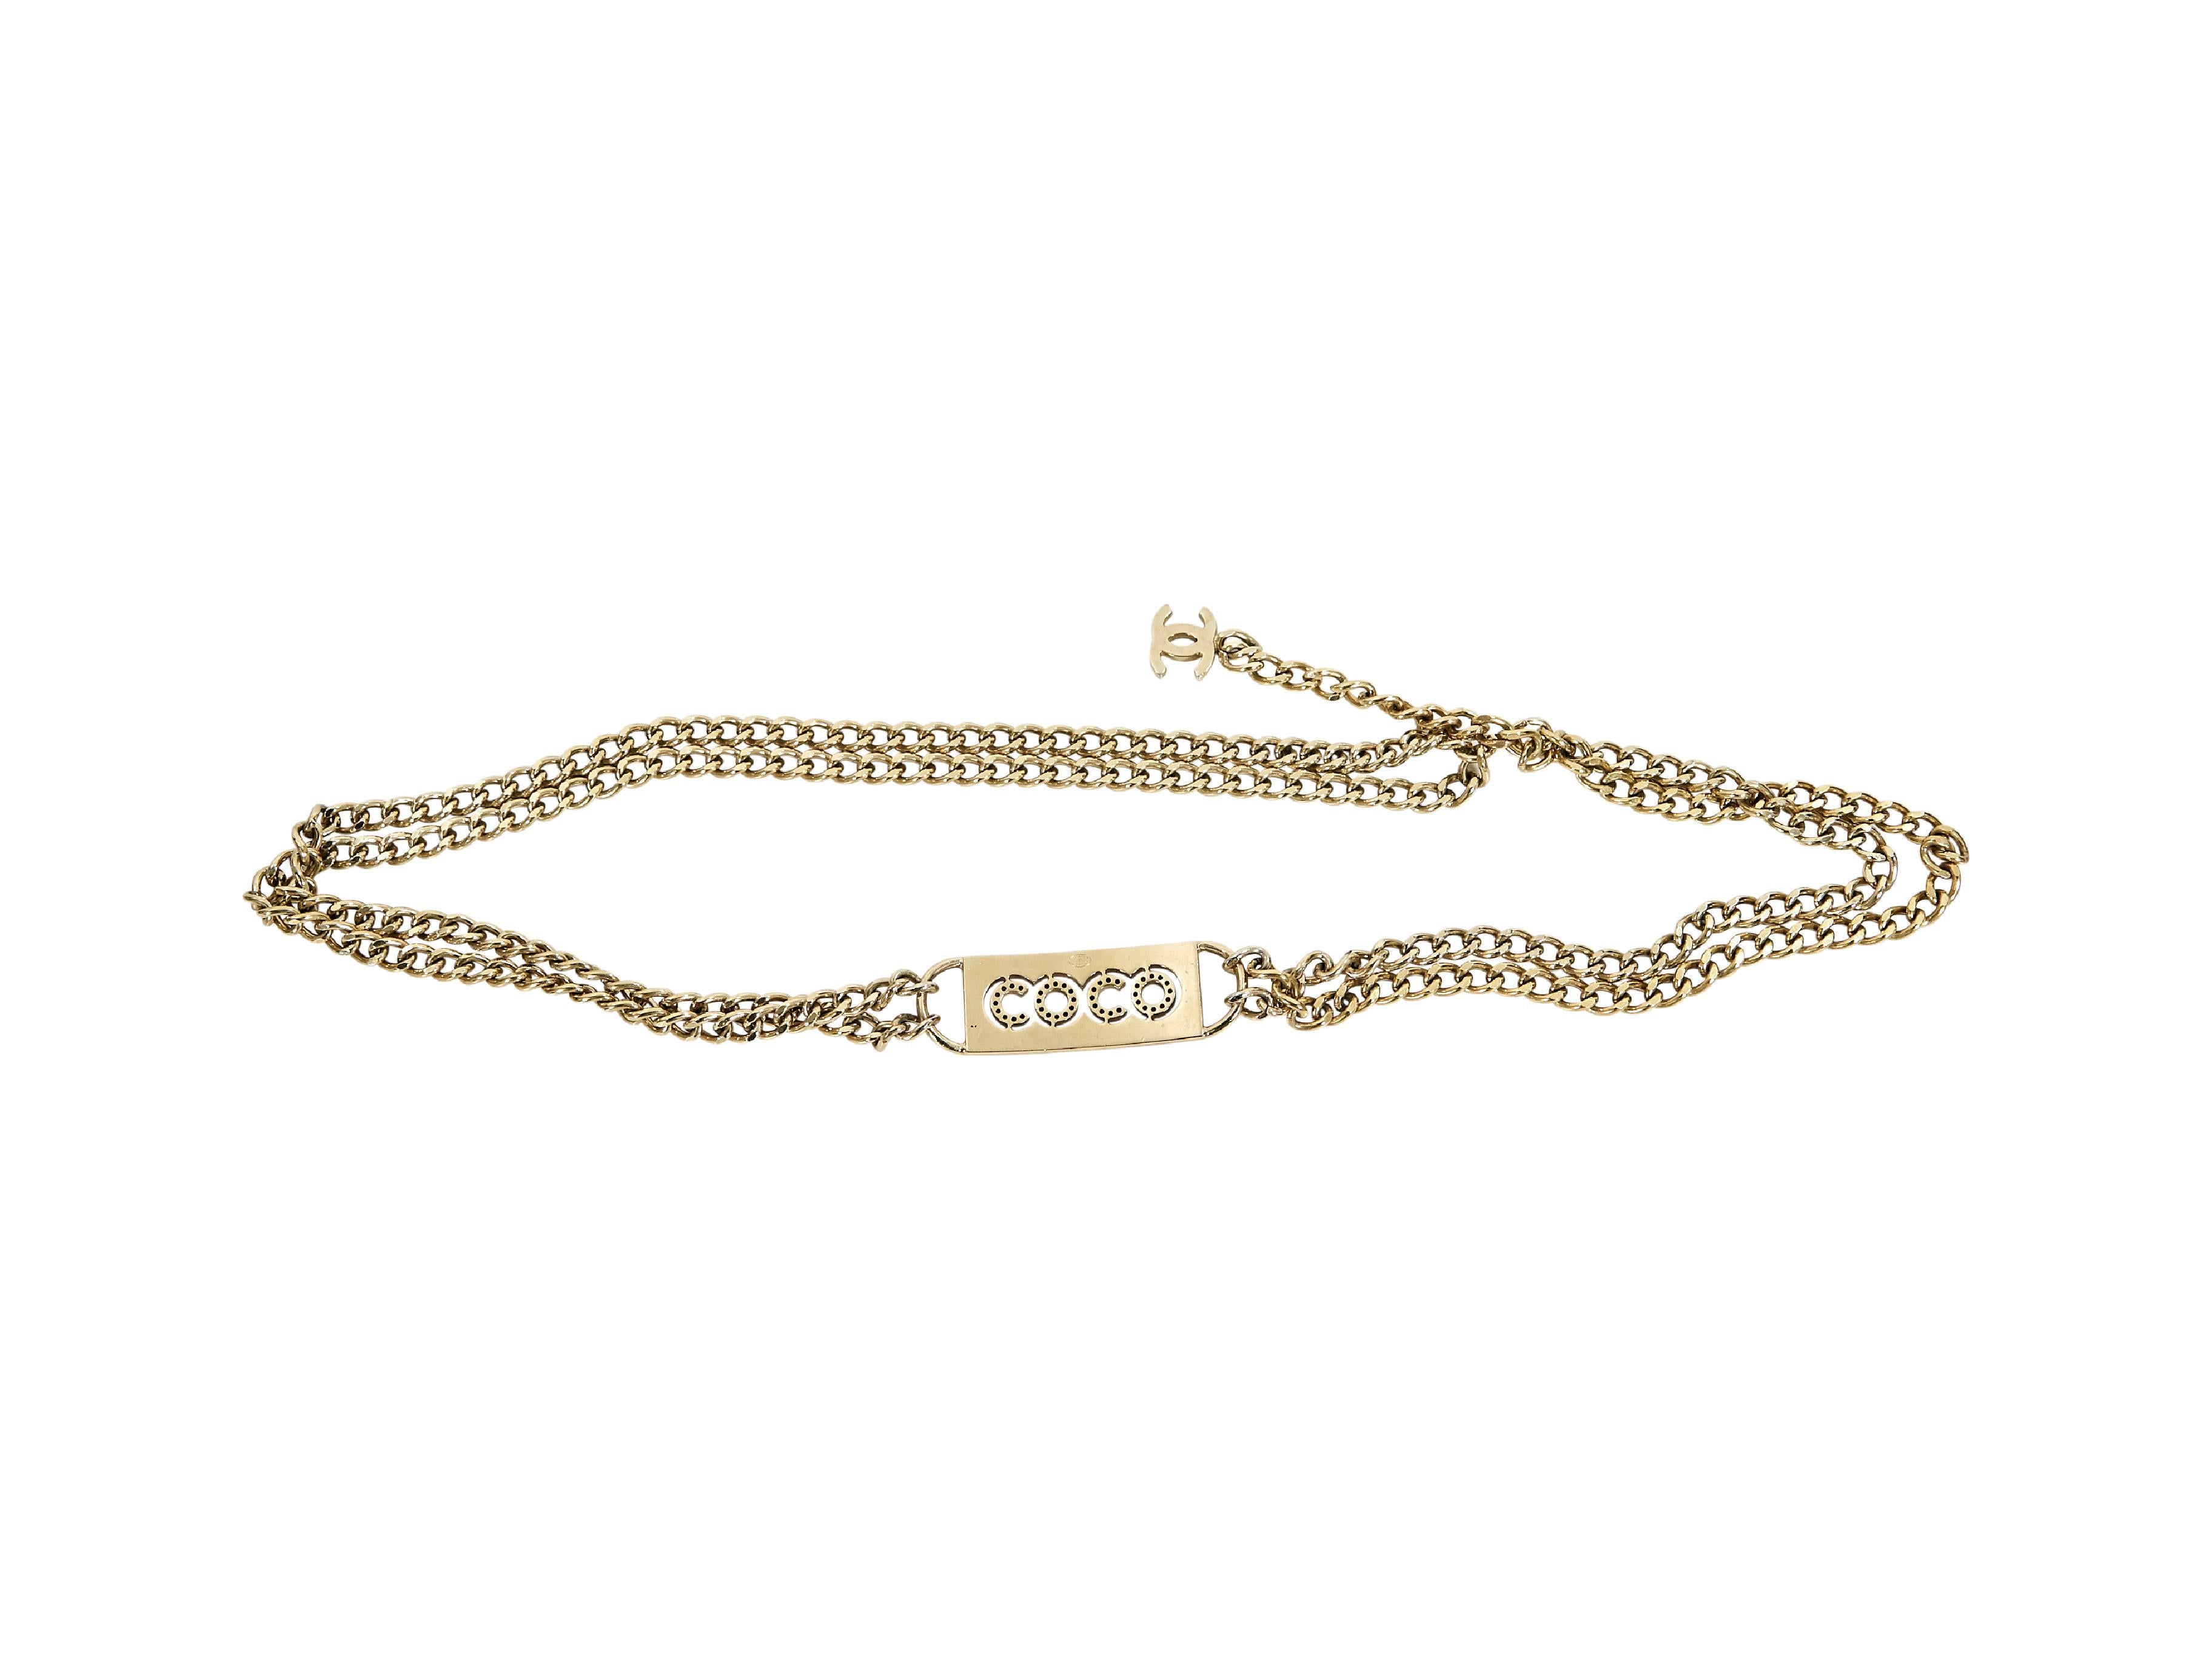 Product details:  Vintage goldtone Coco chain belt by Chanel.  'Coco' plaque accent.  Clasp closure.  28